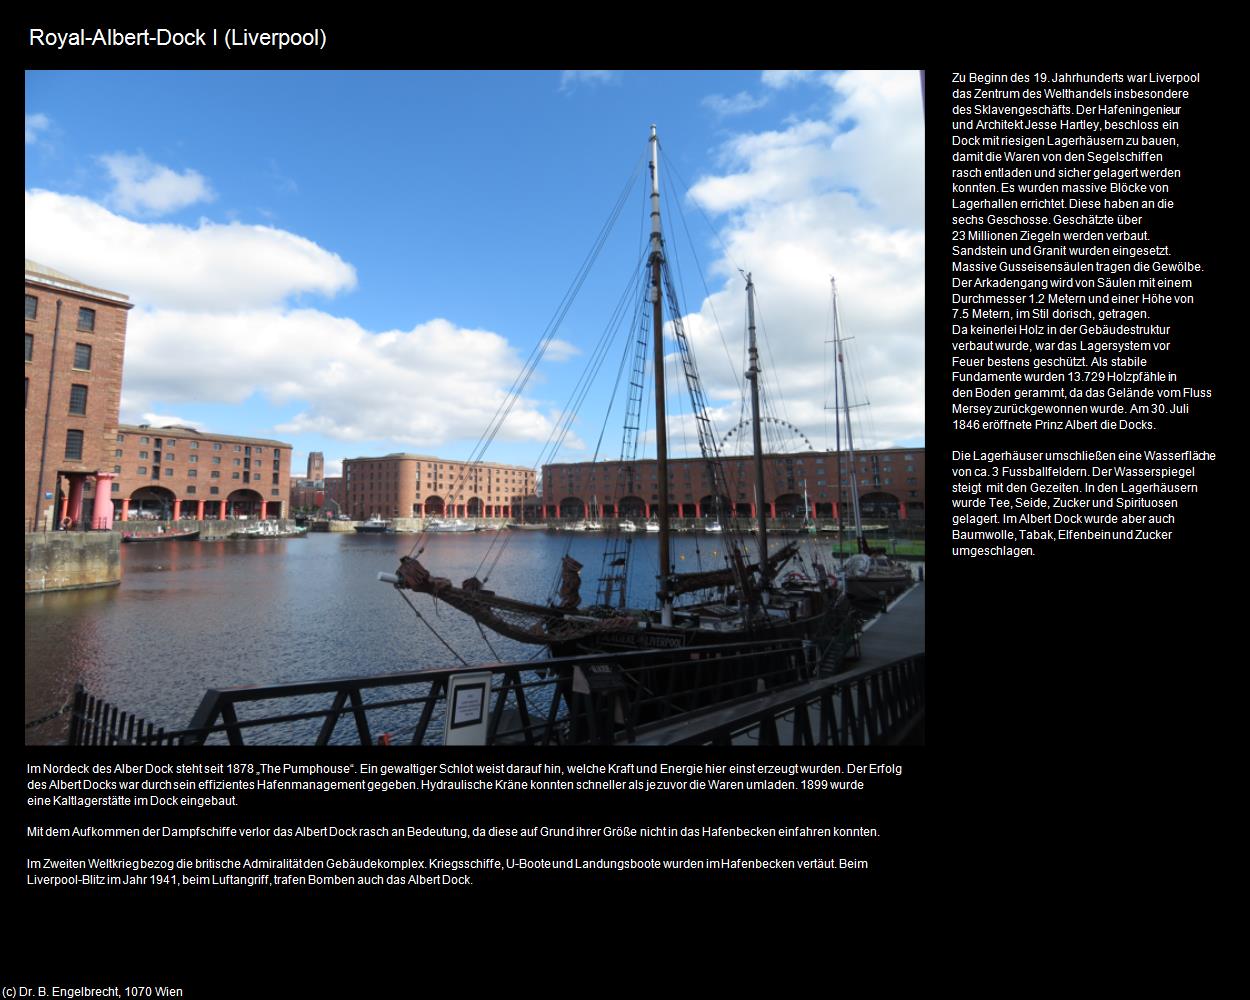 Royal-Albert-Dock I   (Liverpool, England) in Kulturatlas-ENGLAND und WALES